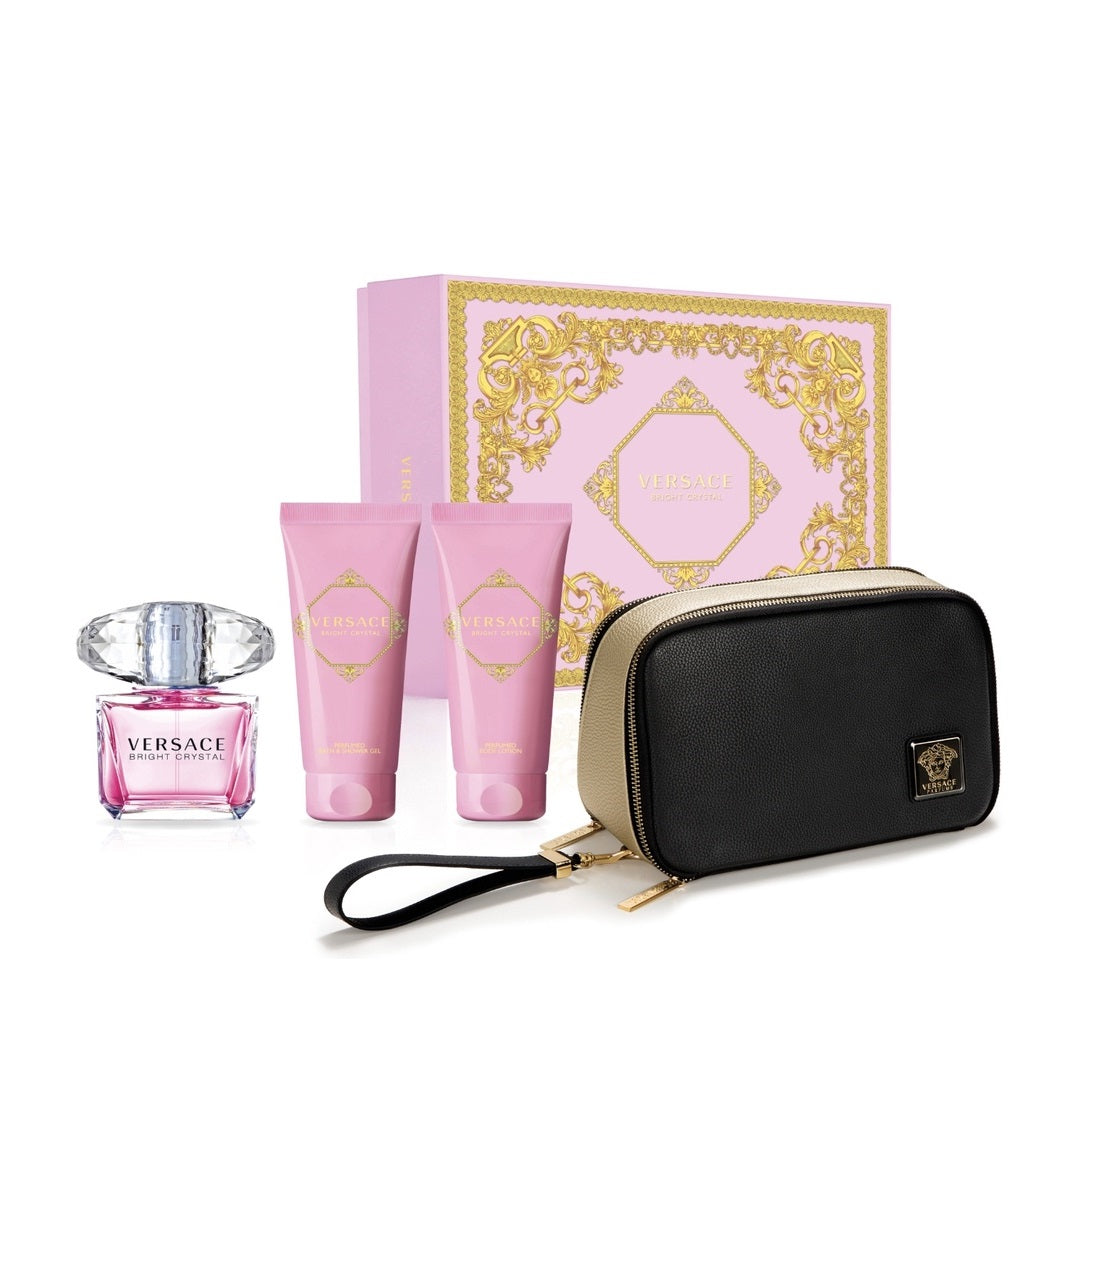 chanel perfume sampler set